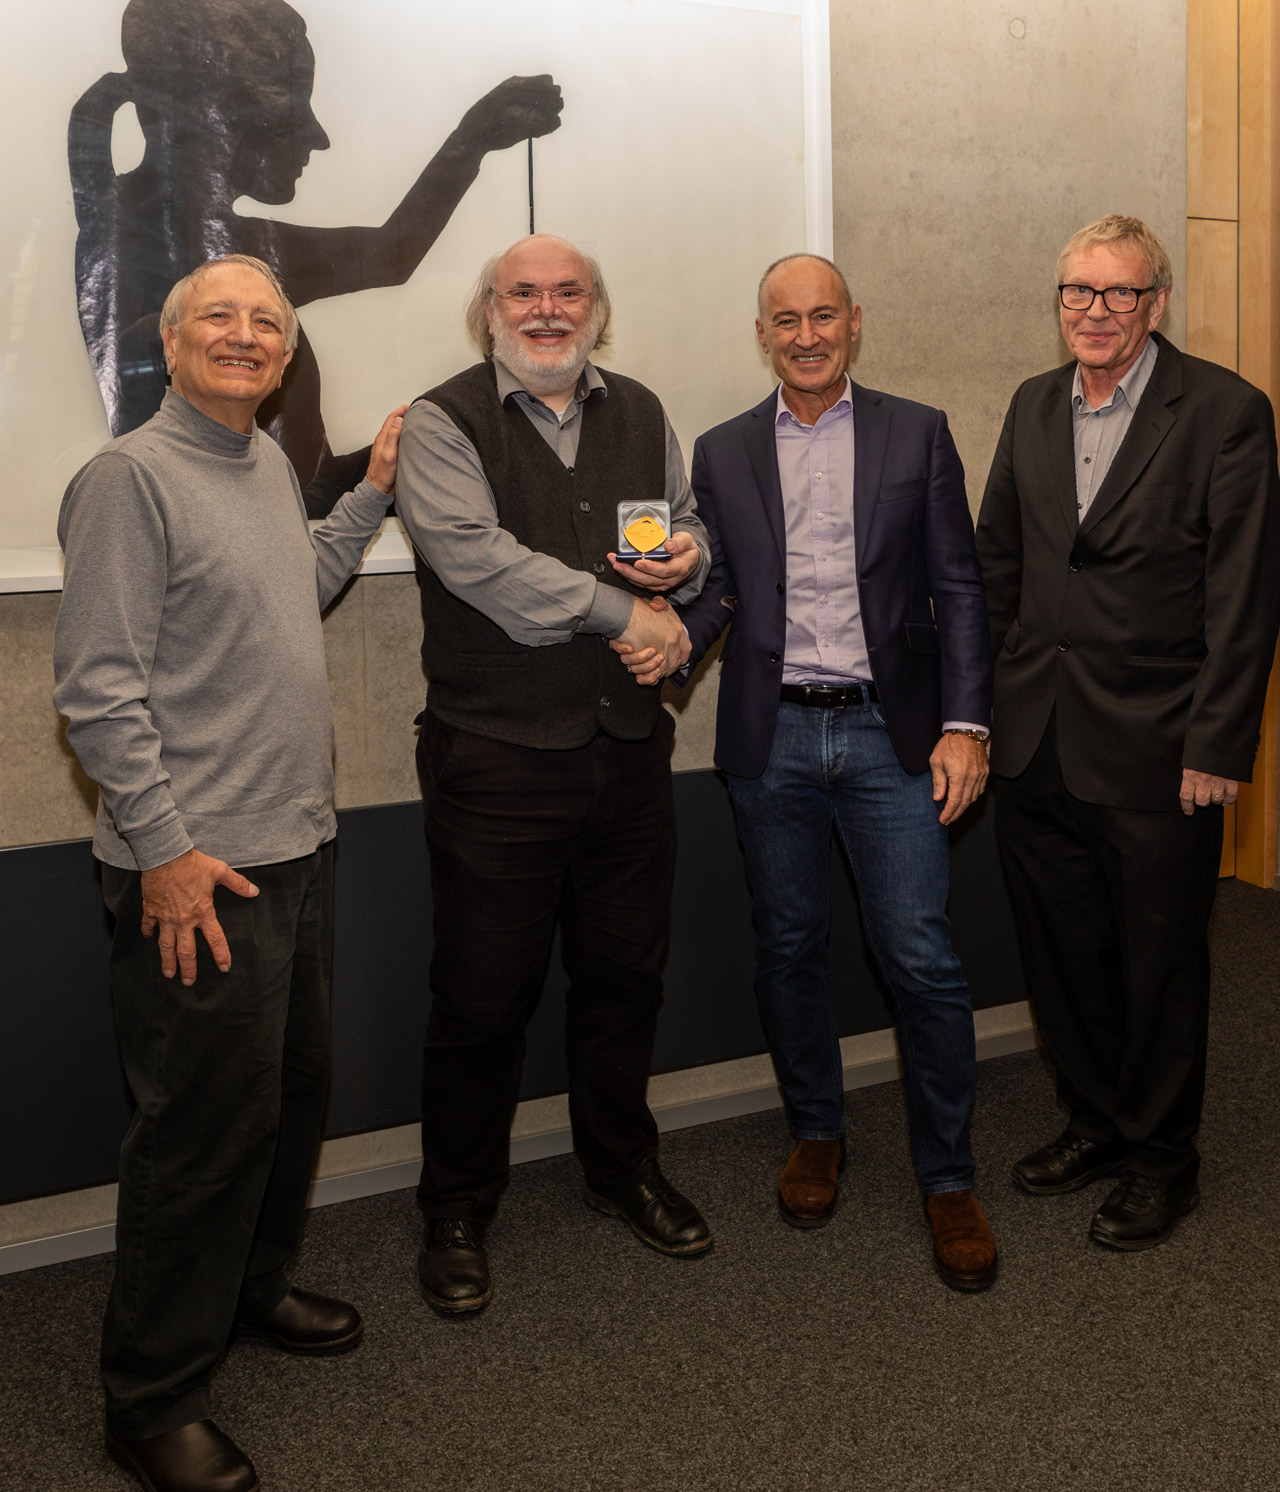 Photo showing Philipp Slusallek as he receives the EG Medal from Pat Hanrahan, Markus Gross, and Hans-Peter Seidel